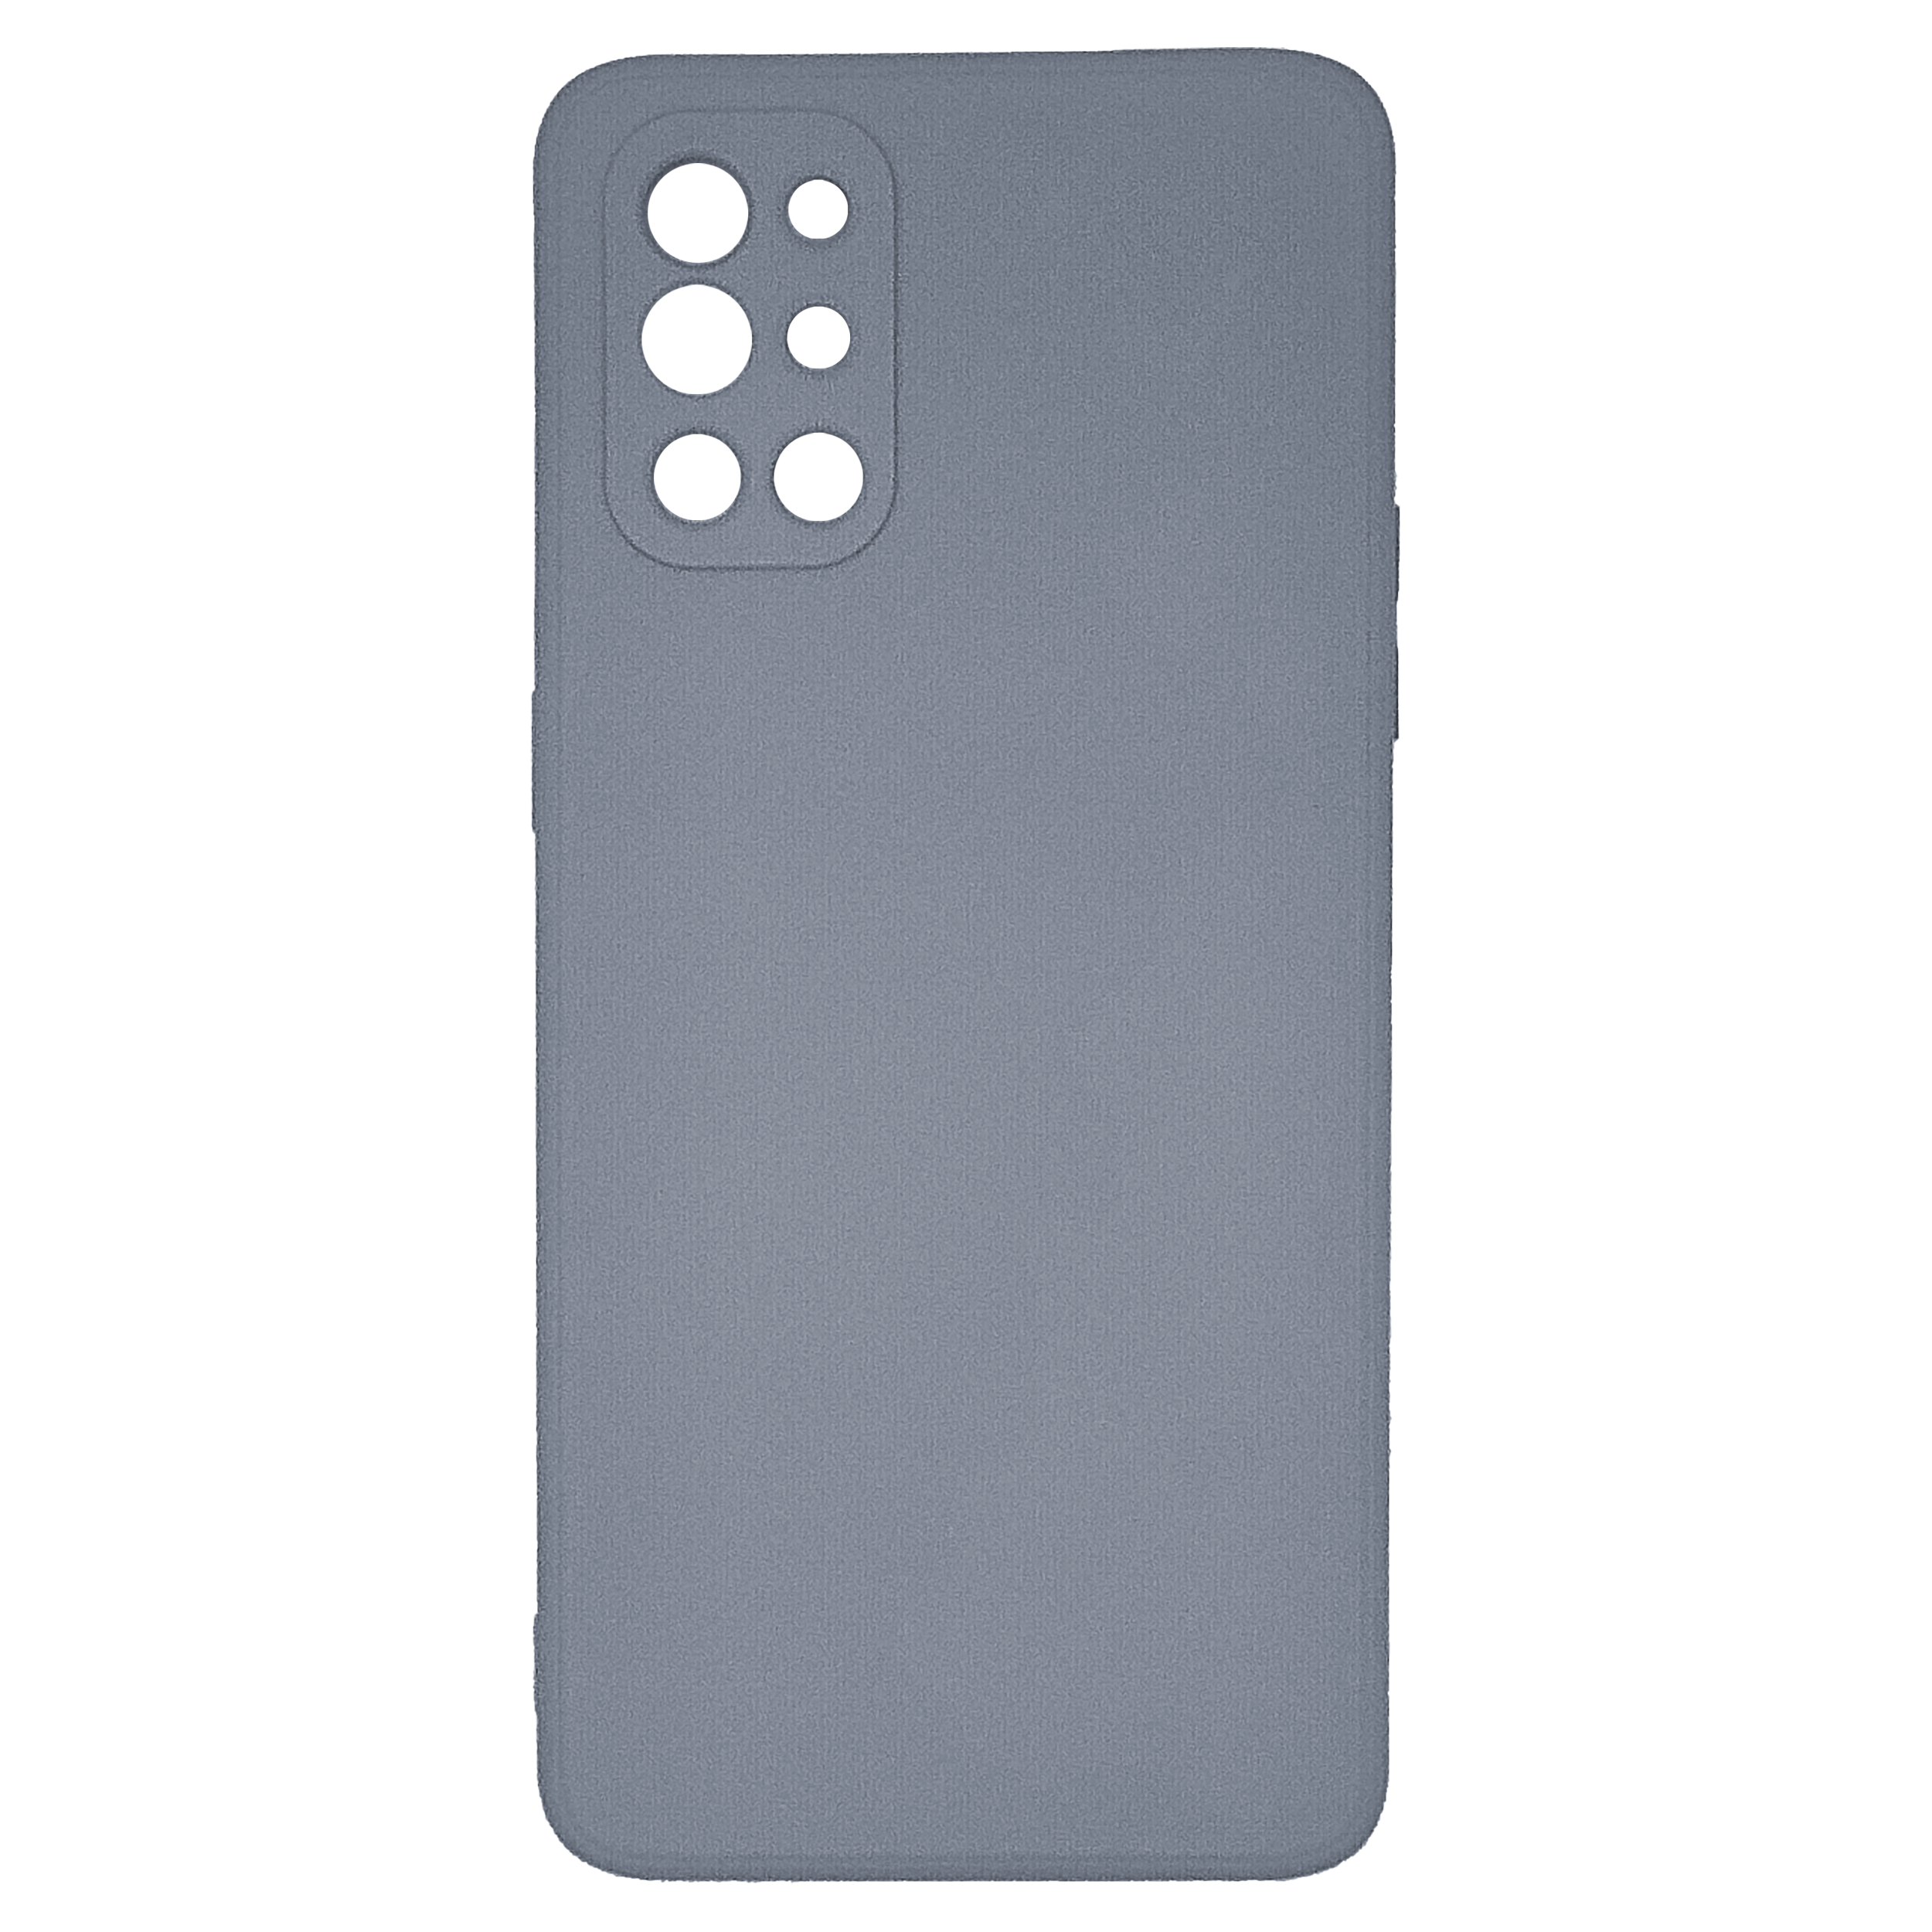 Soundrevo - Soundrevo TPU Back Case For OnePlus 9R (Anti-Slip, C019R, Grey)